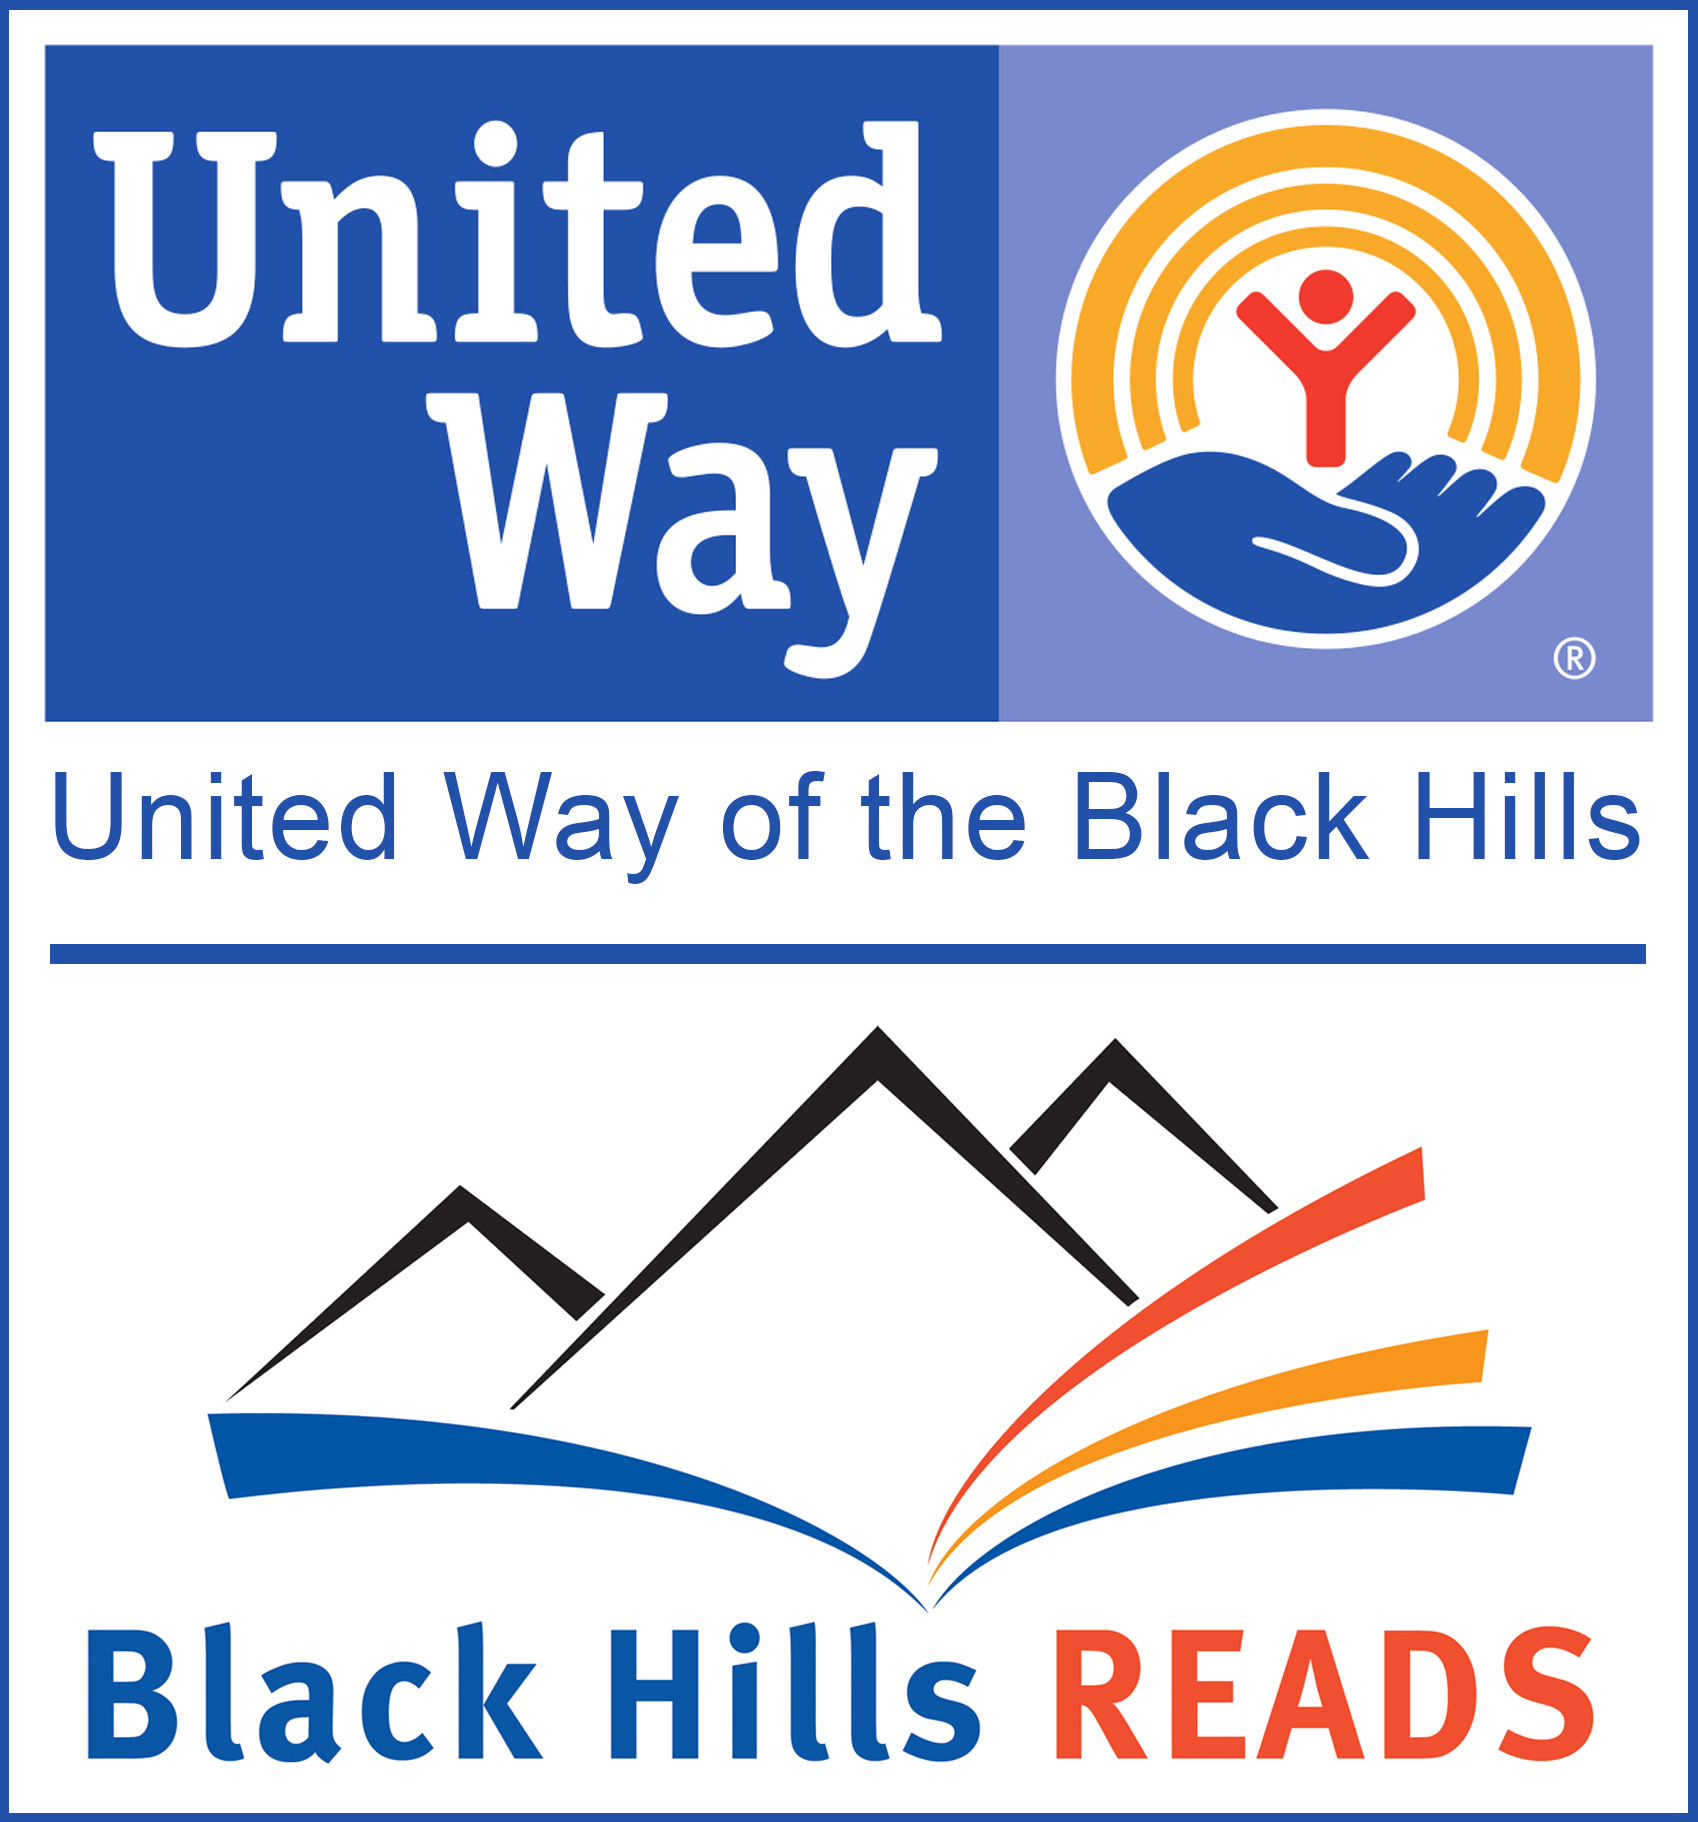 United Way of the Black Hills - Black Hills Reads logos.